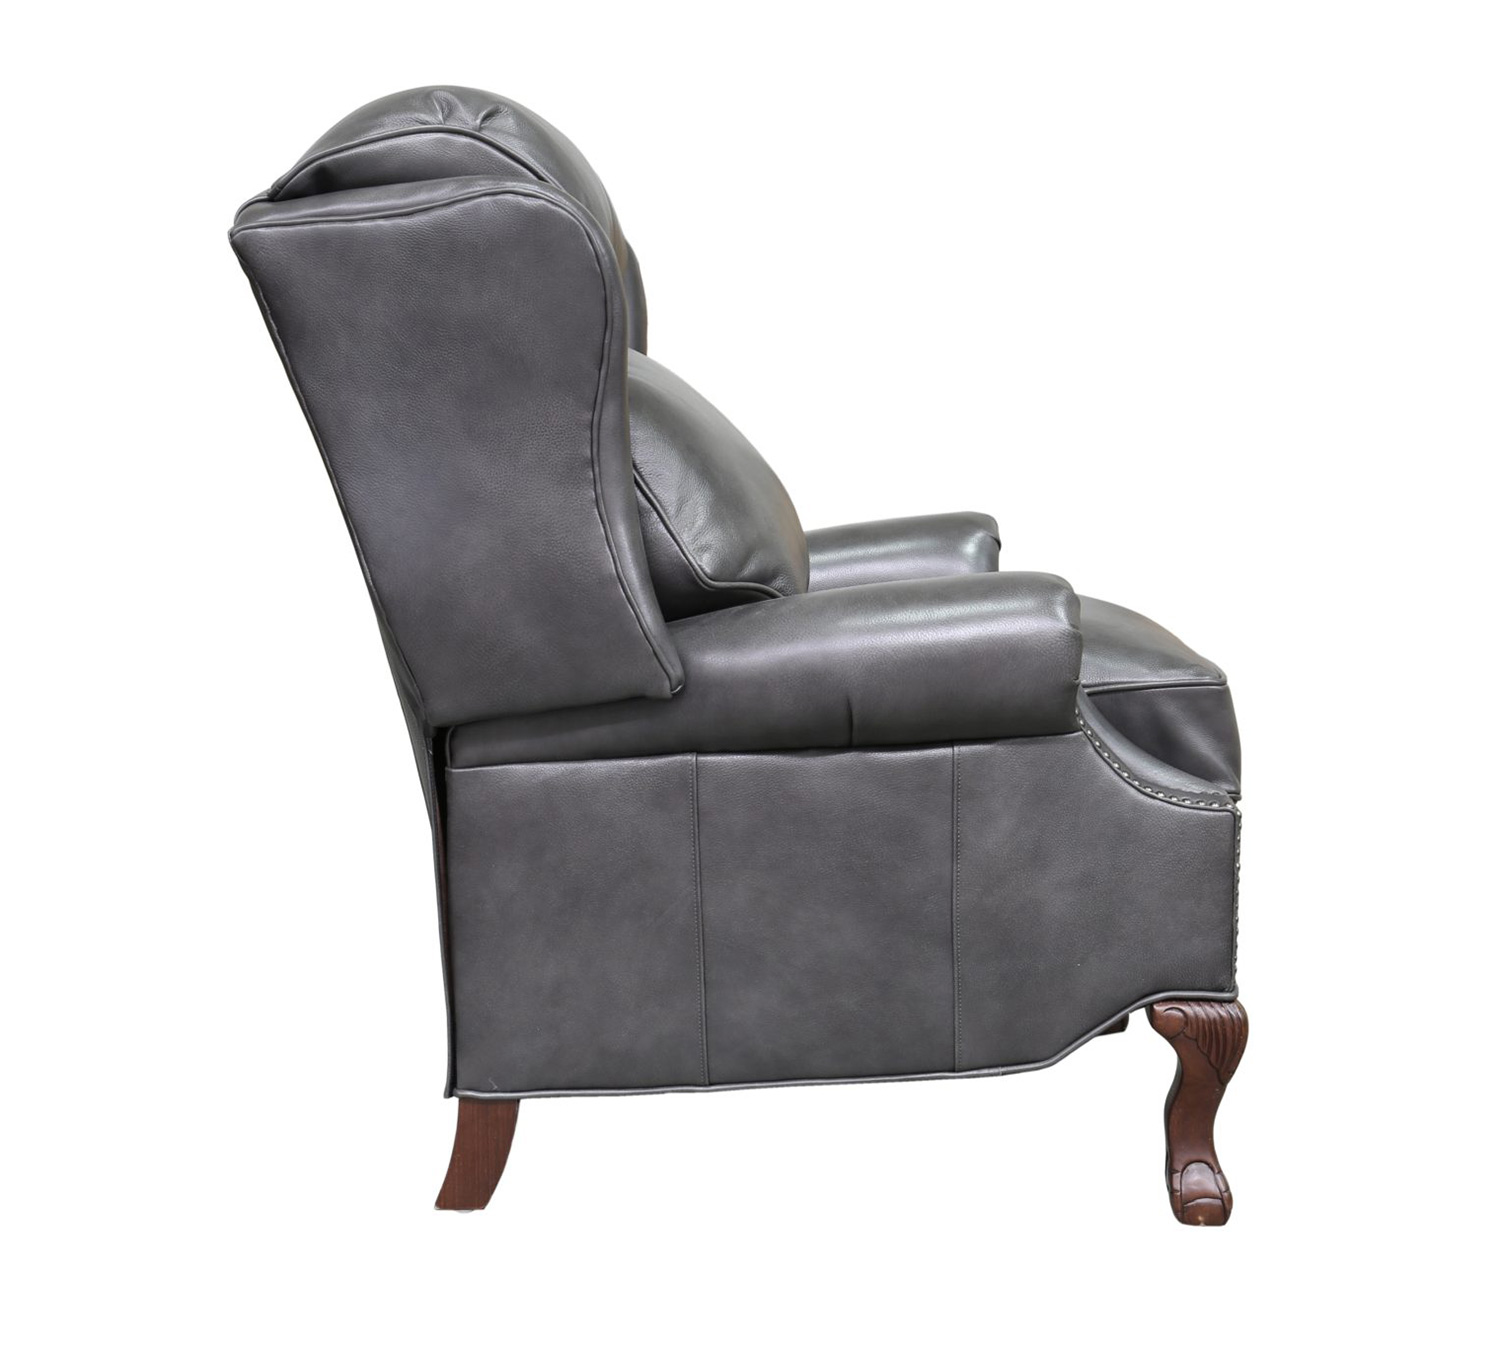 Barcalounger Danbury Recliner Chair - Wrenn Gray/all leather